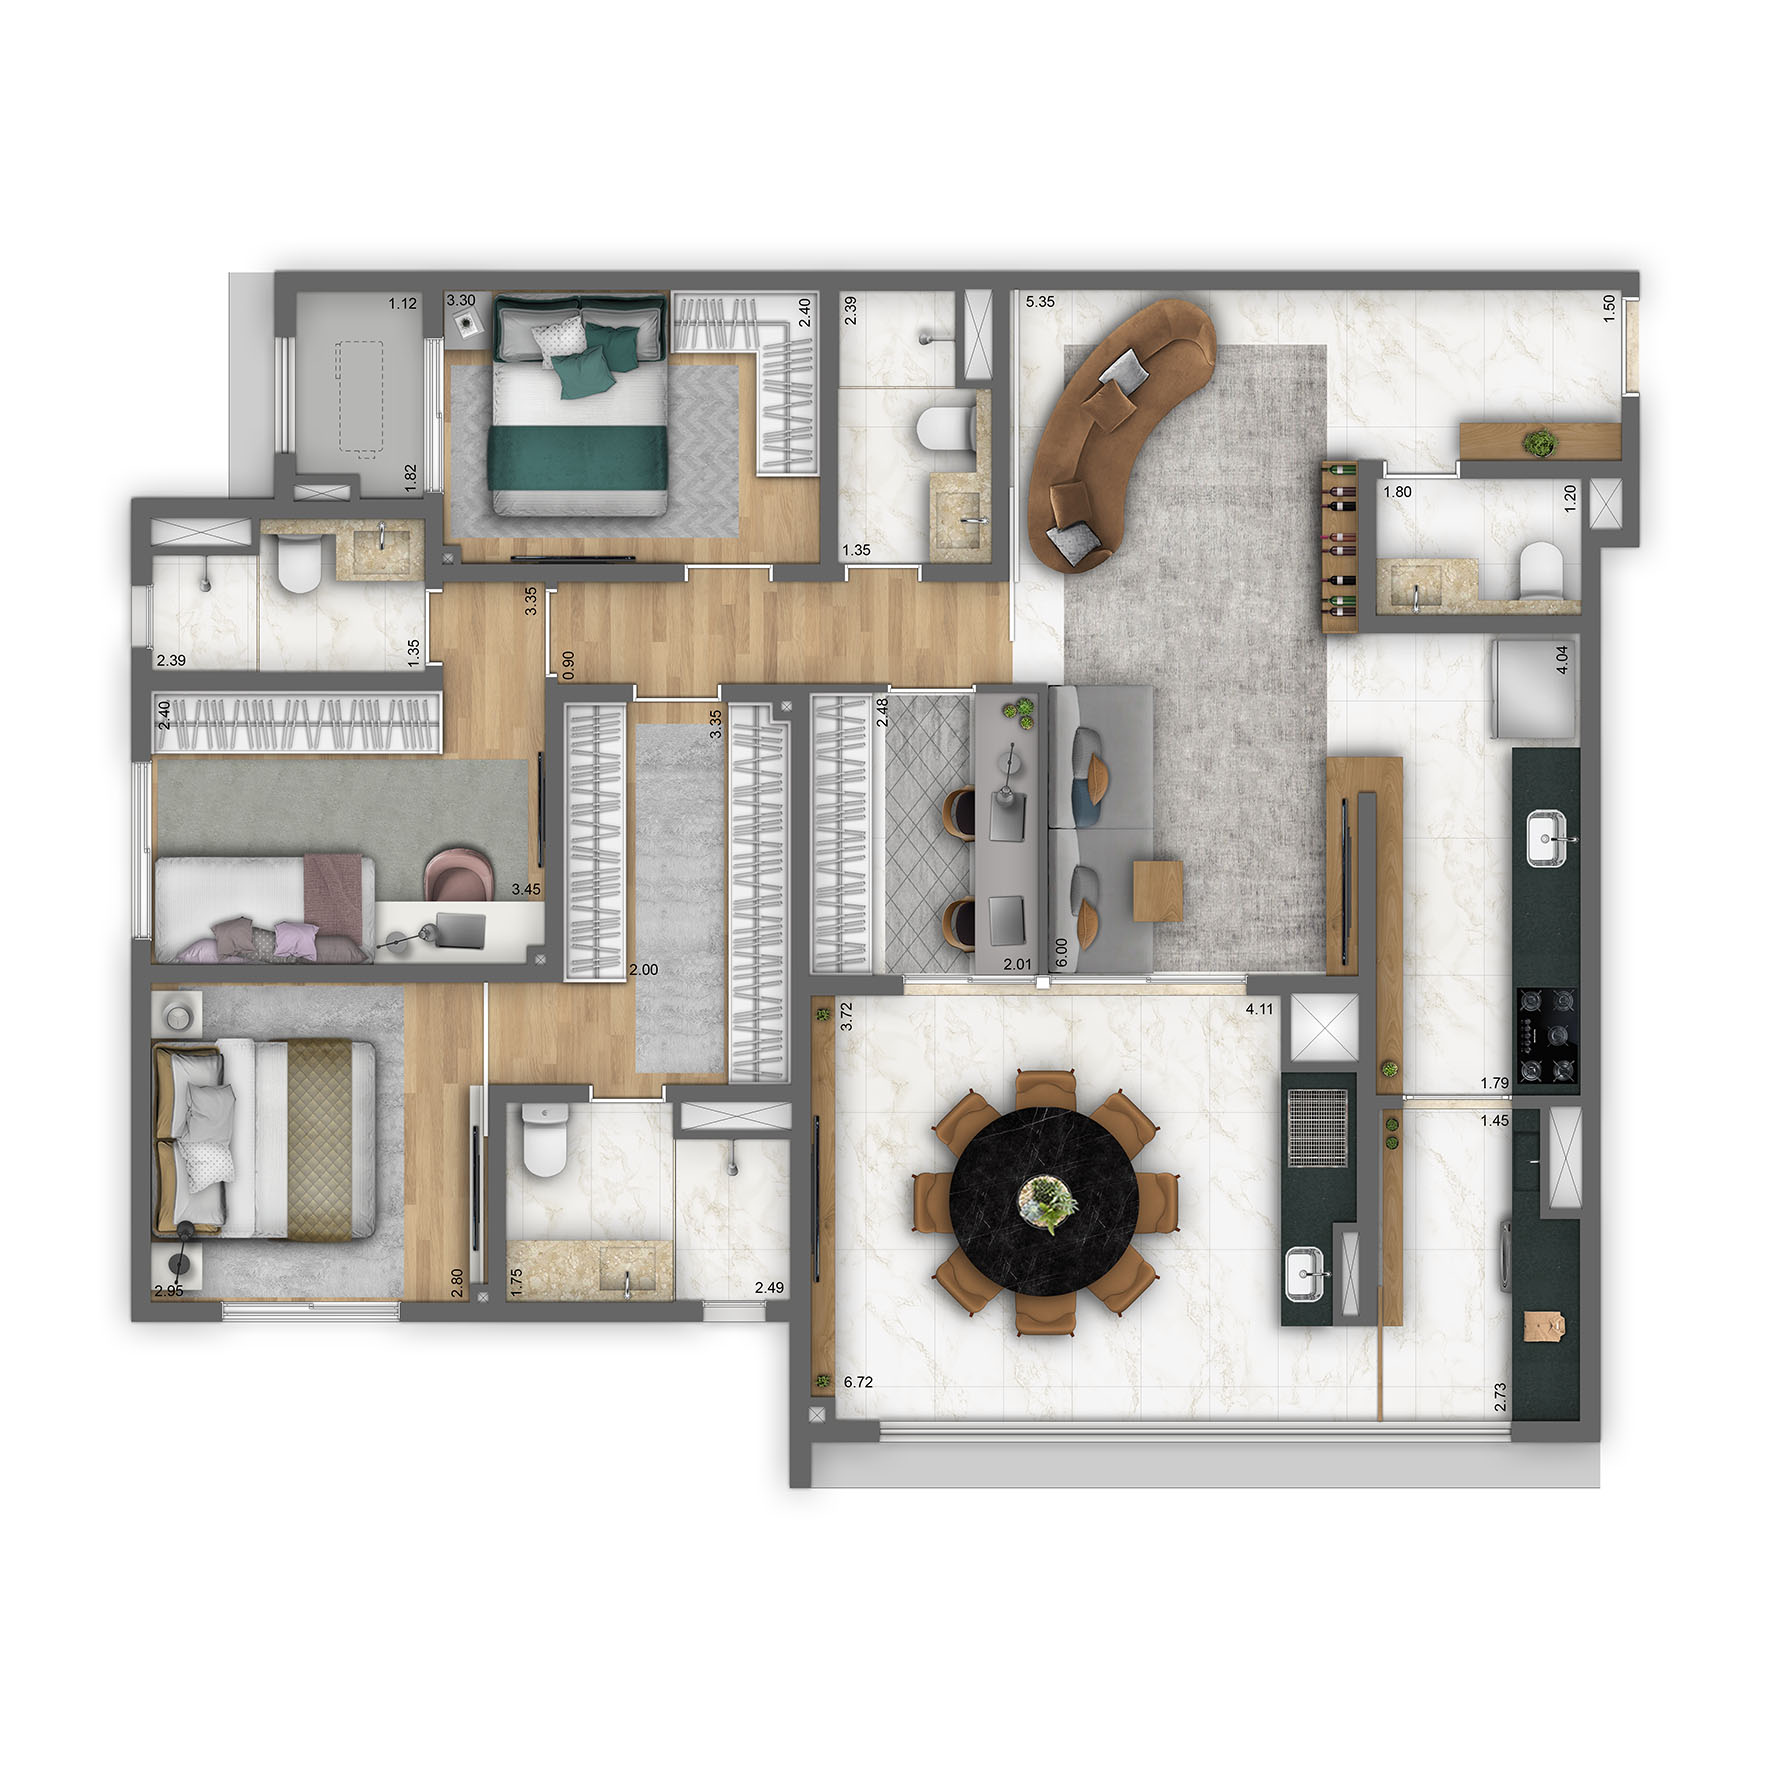 120 m² (4 dorms)